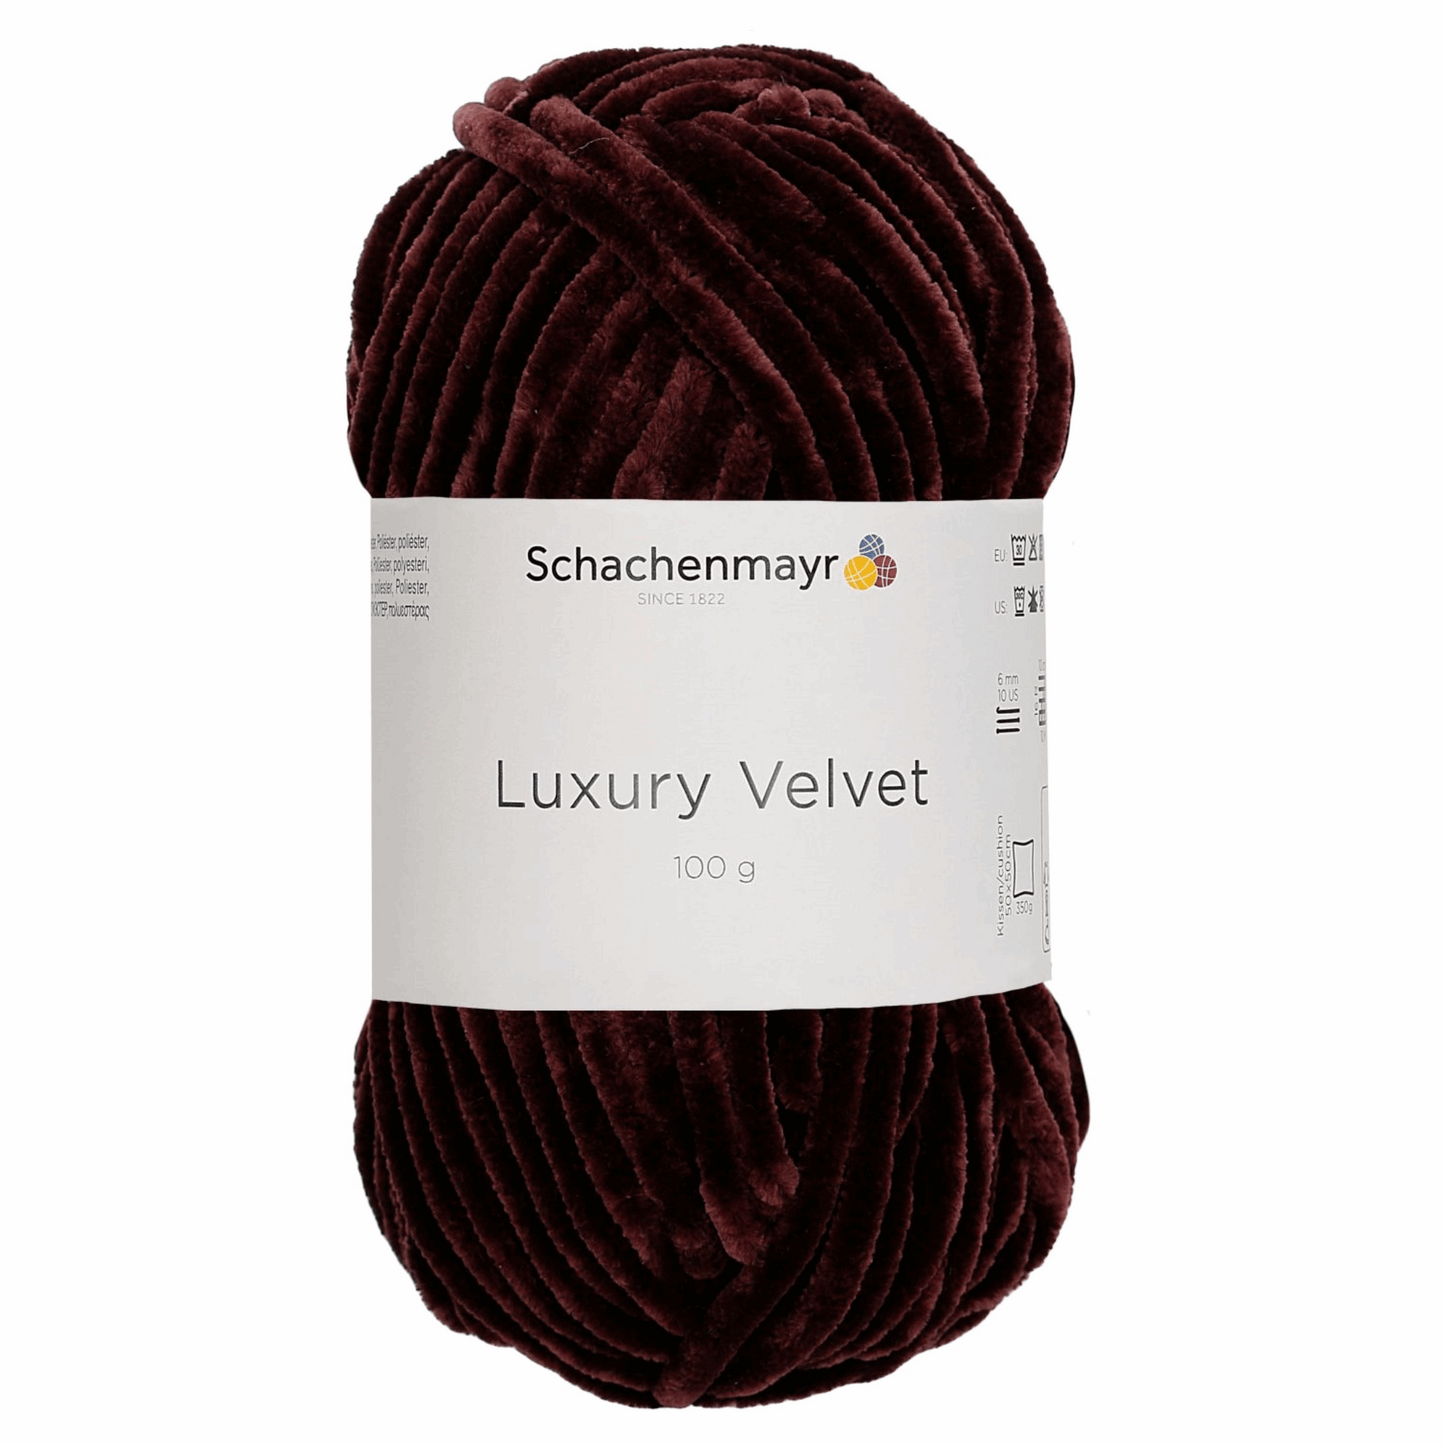 Schachenmayr Luxury Velvet 100g, 90592, color bear 10